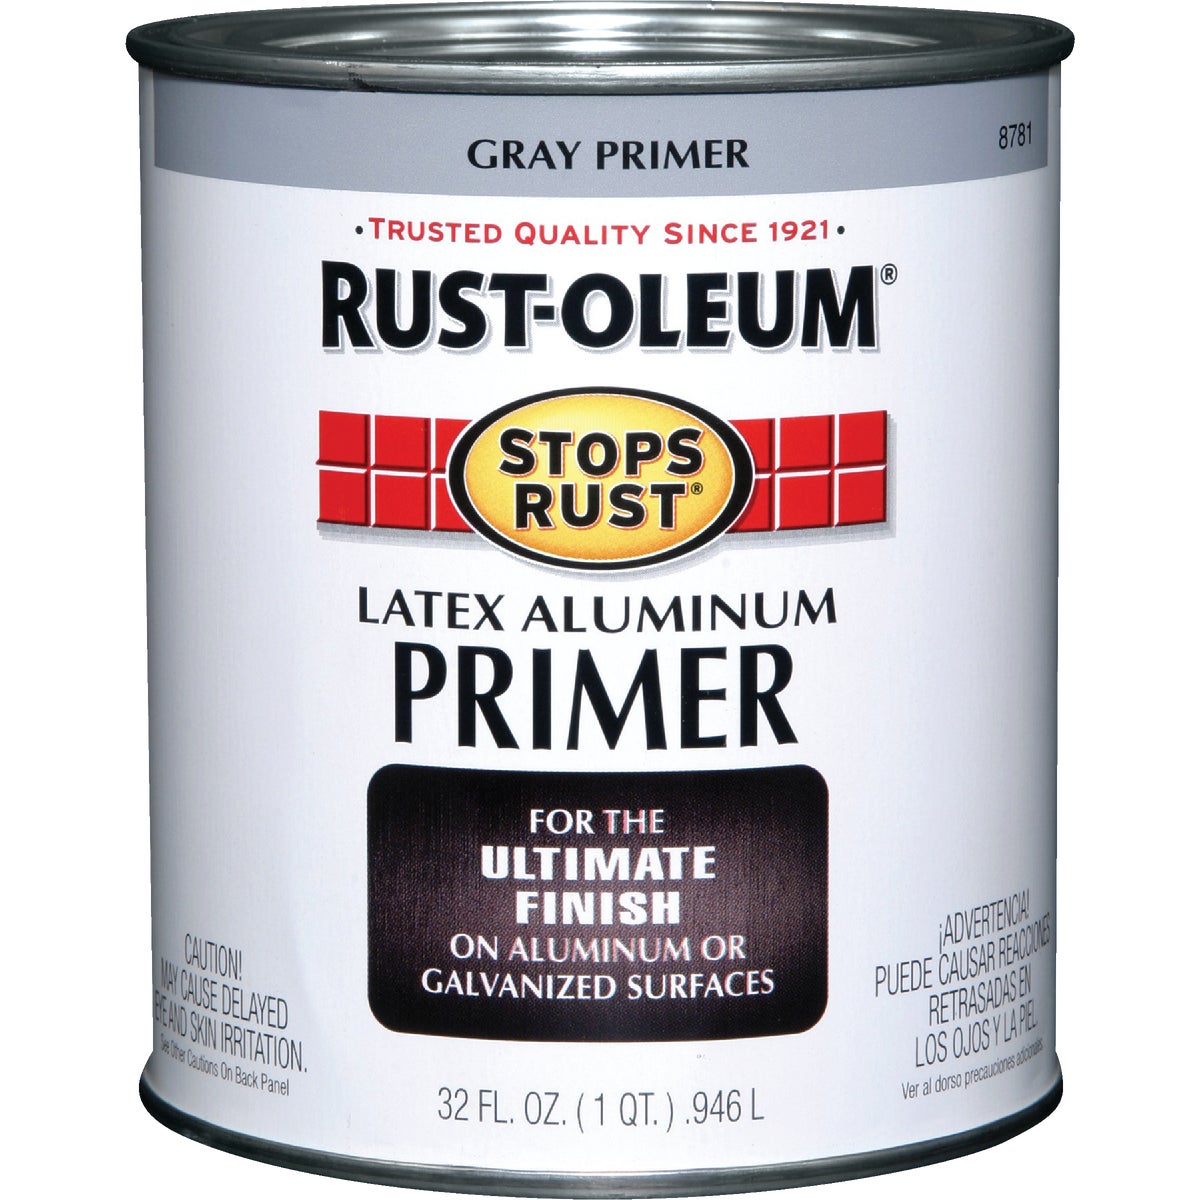 Rust-Oleum Stops Rust Latex Aluminum Primer, Gray, 1 Qt.